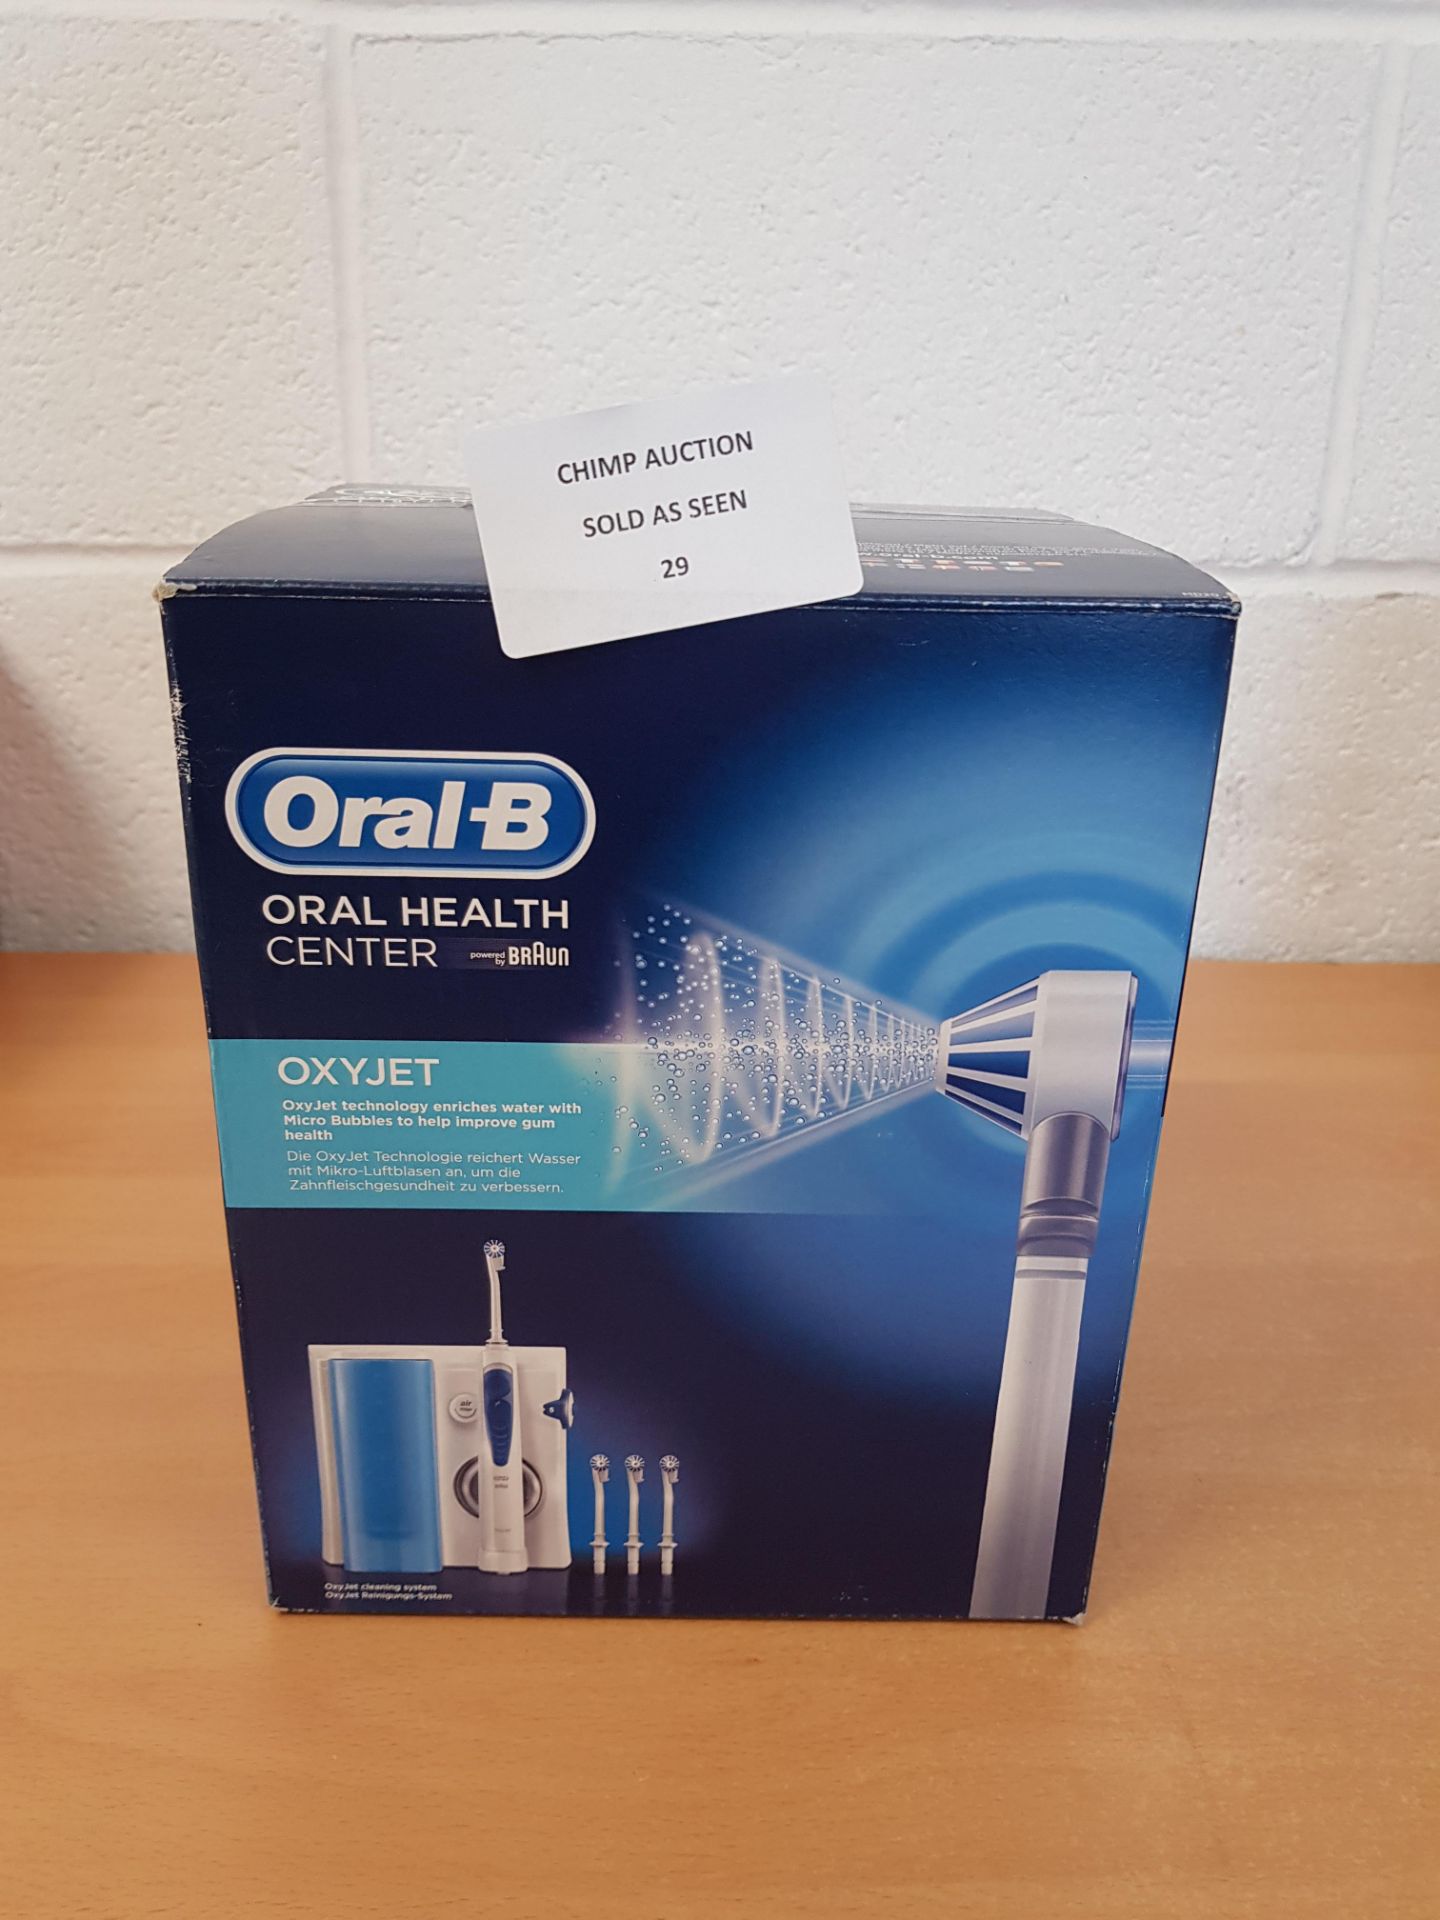 Oral-B Oxyjet Oral Health Center RRP £79.99.